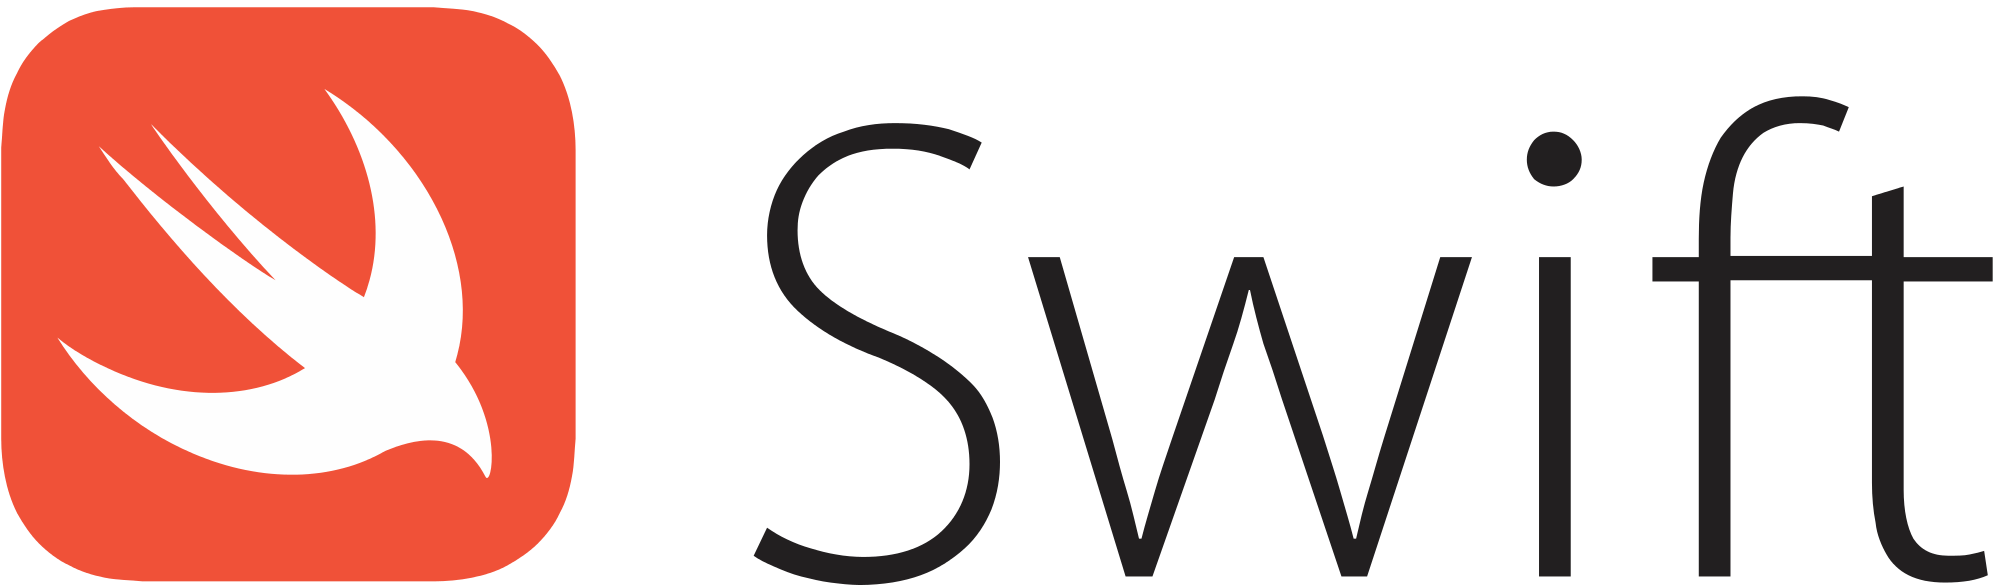 Square Infosoft Mobile App Development Services Technology Swift Programming Language